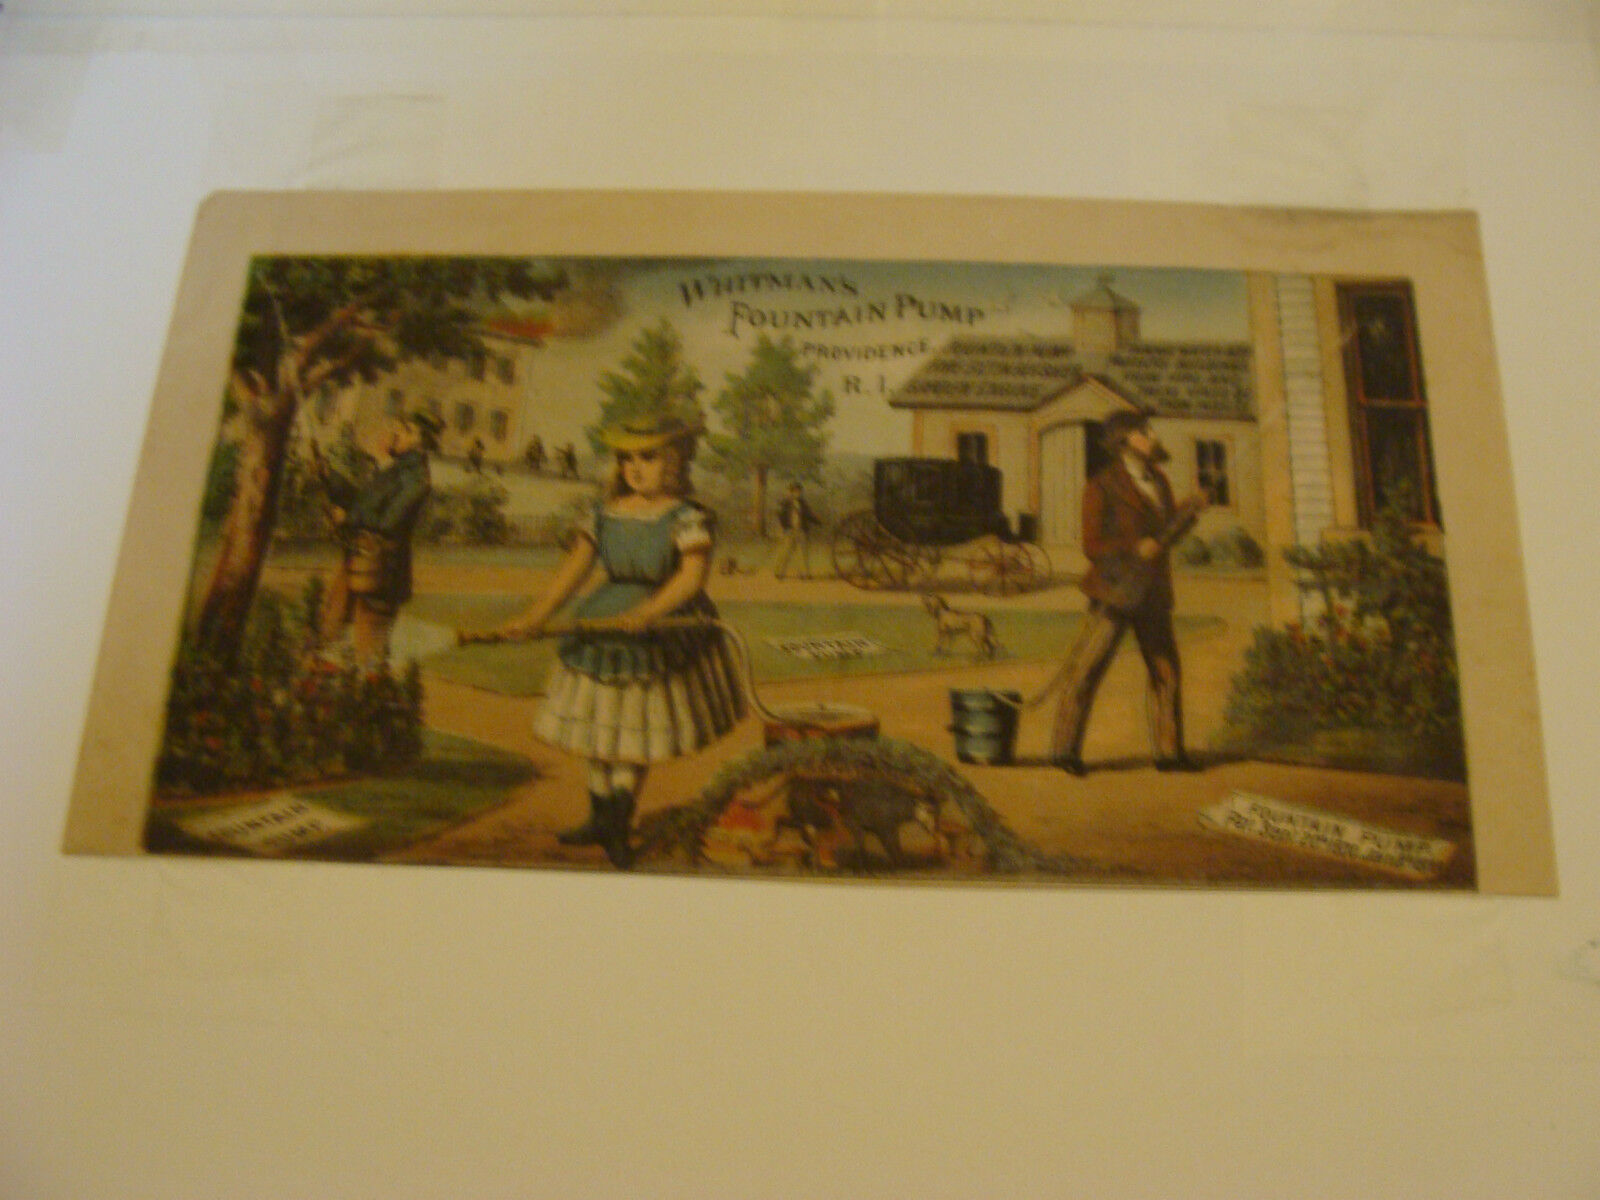 Original Vintage Paper: 1870\'s oversize WHITMAN\'S FOUNTAIN PUMP providence RI